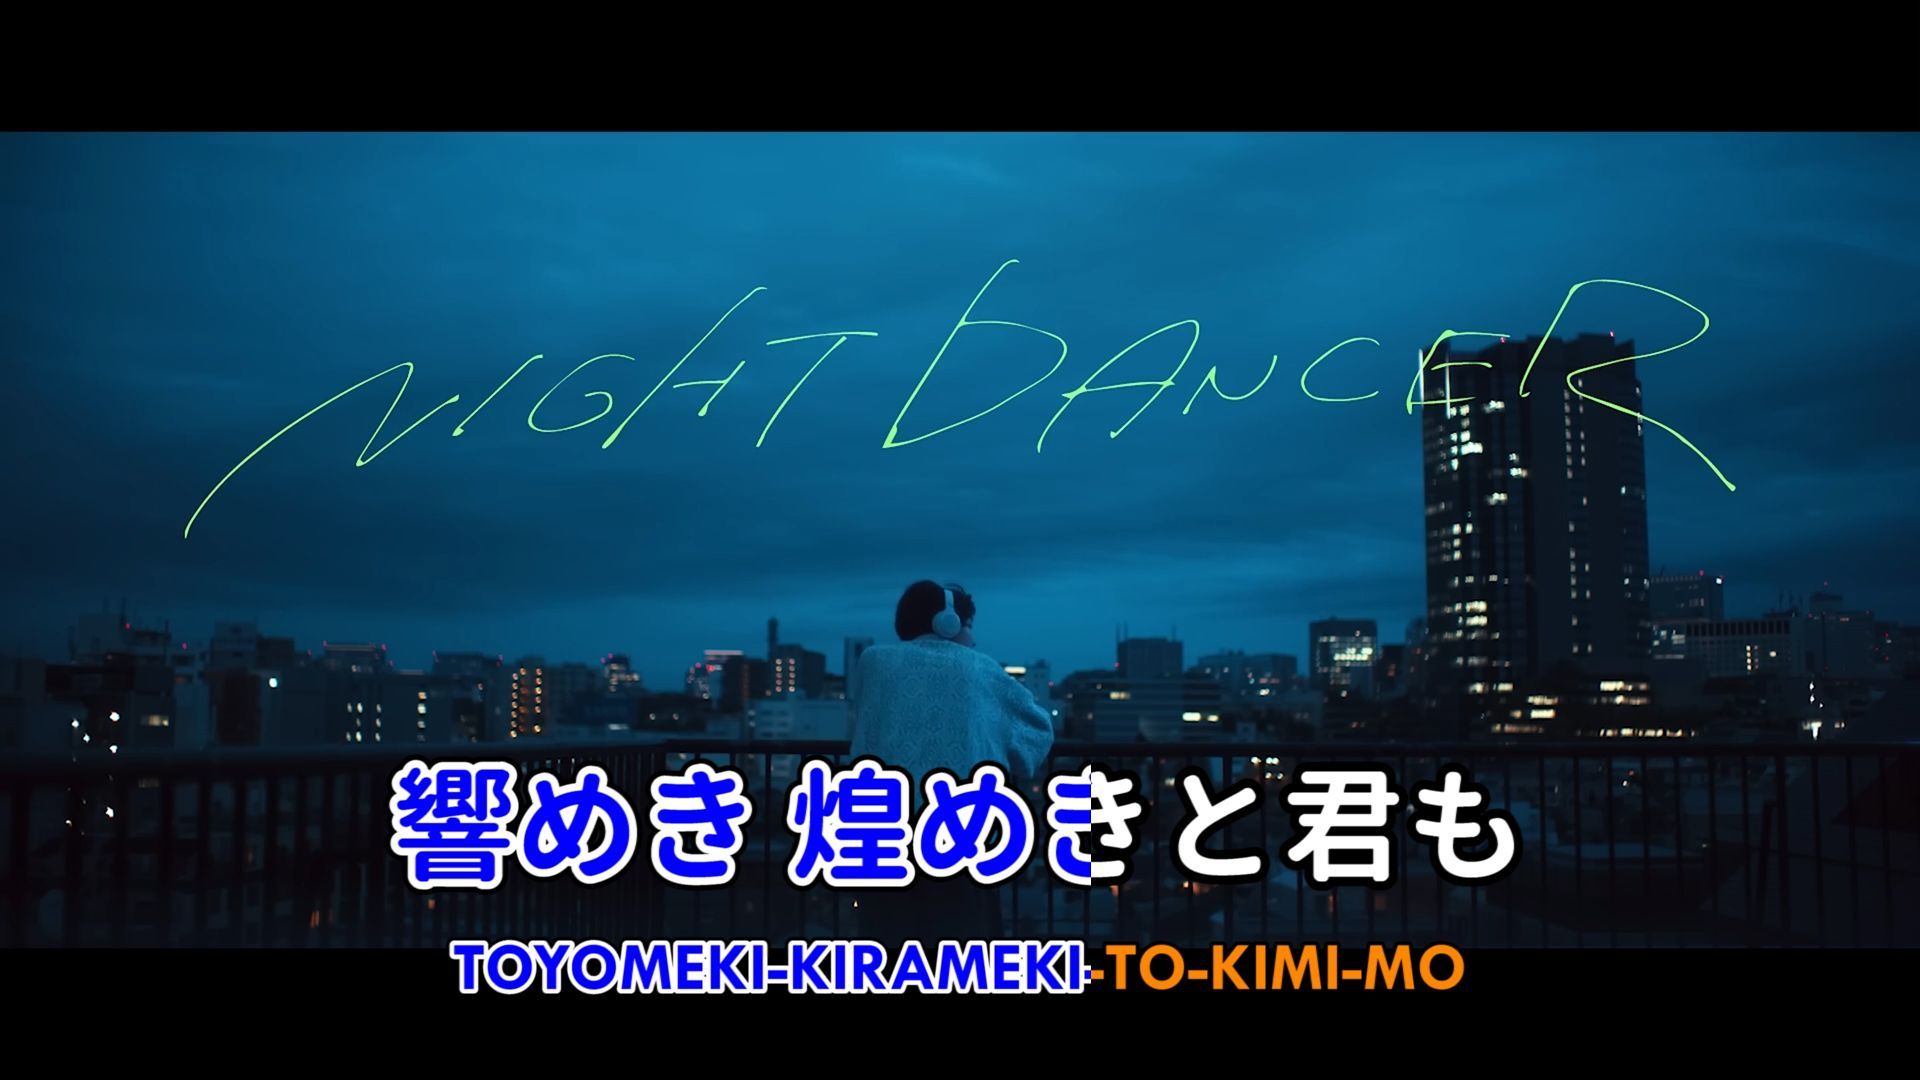 Kirameki: Original / Romaji Lyrics English Translation